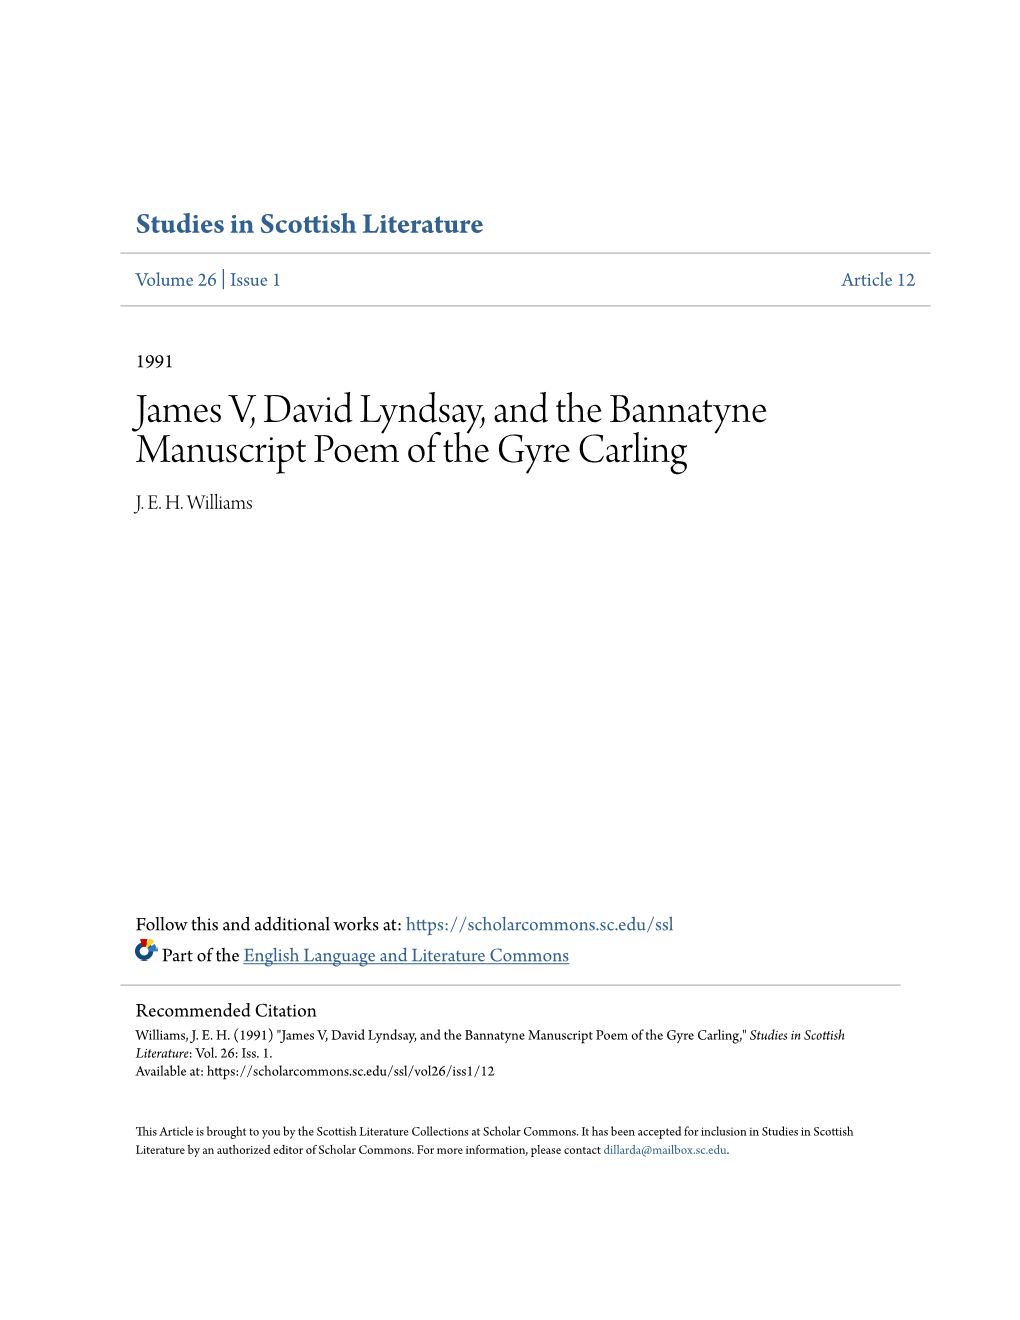 James V, David Lyndsay, and the Bannatyne Manuscript Poem of the Gyre Carling J